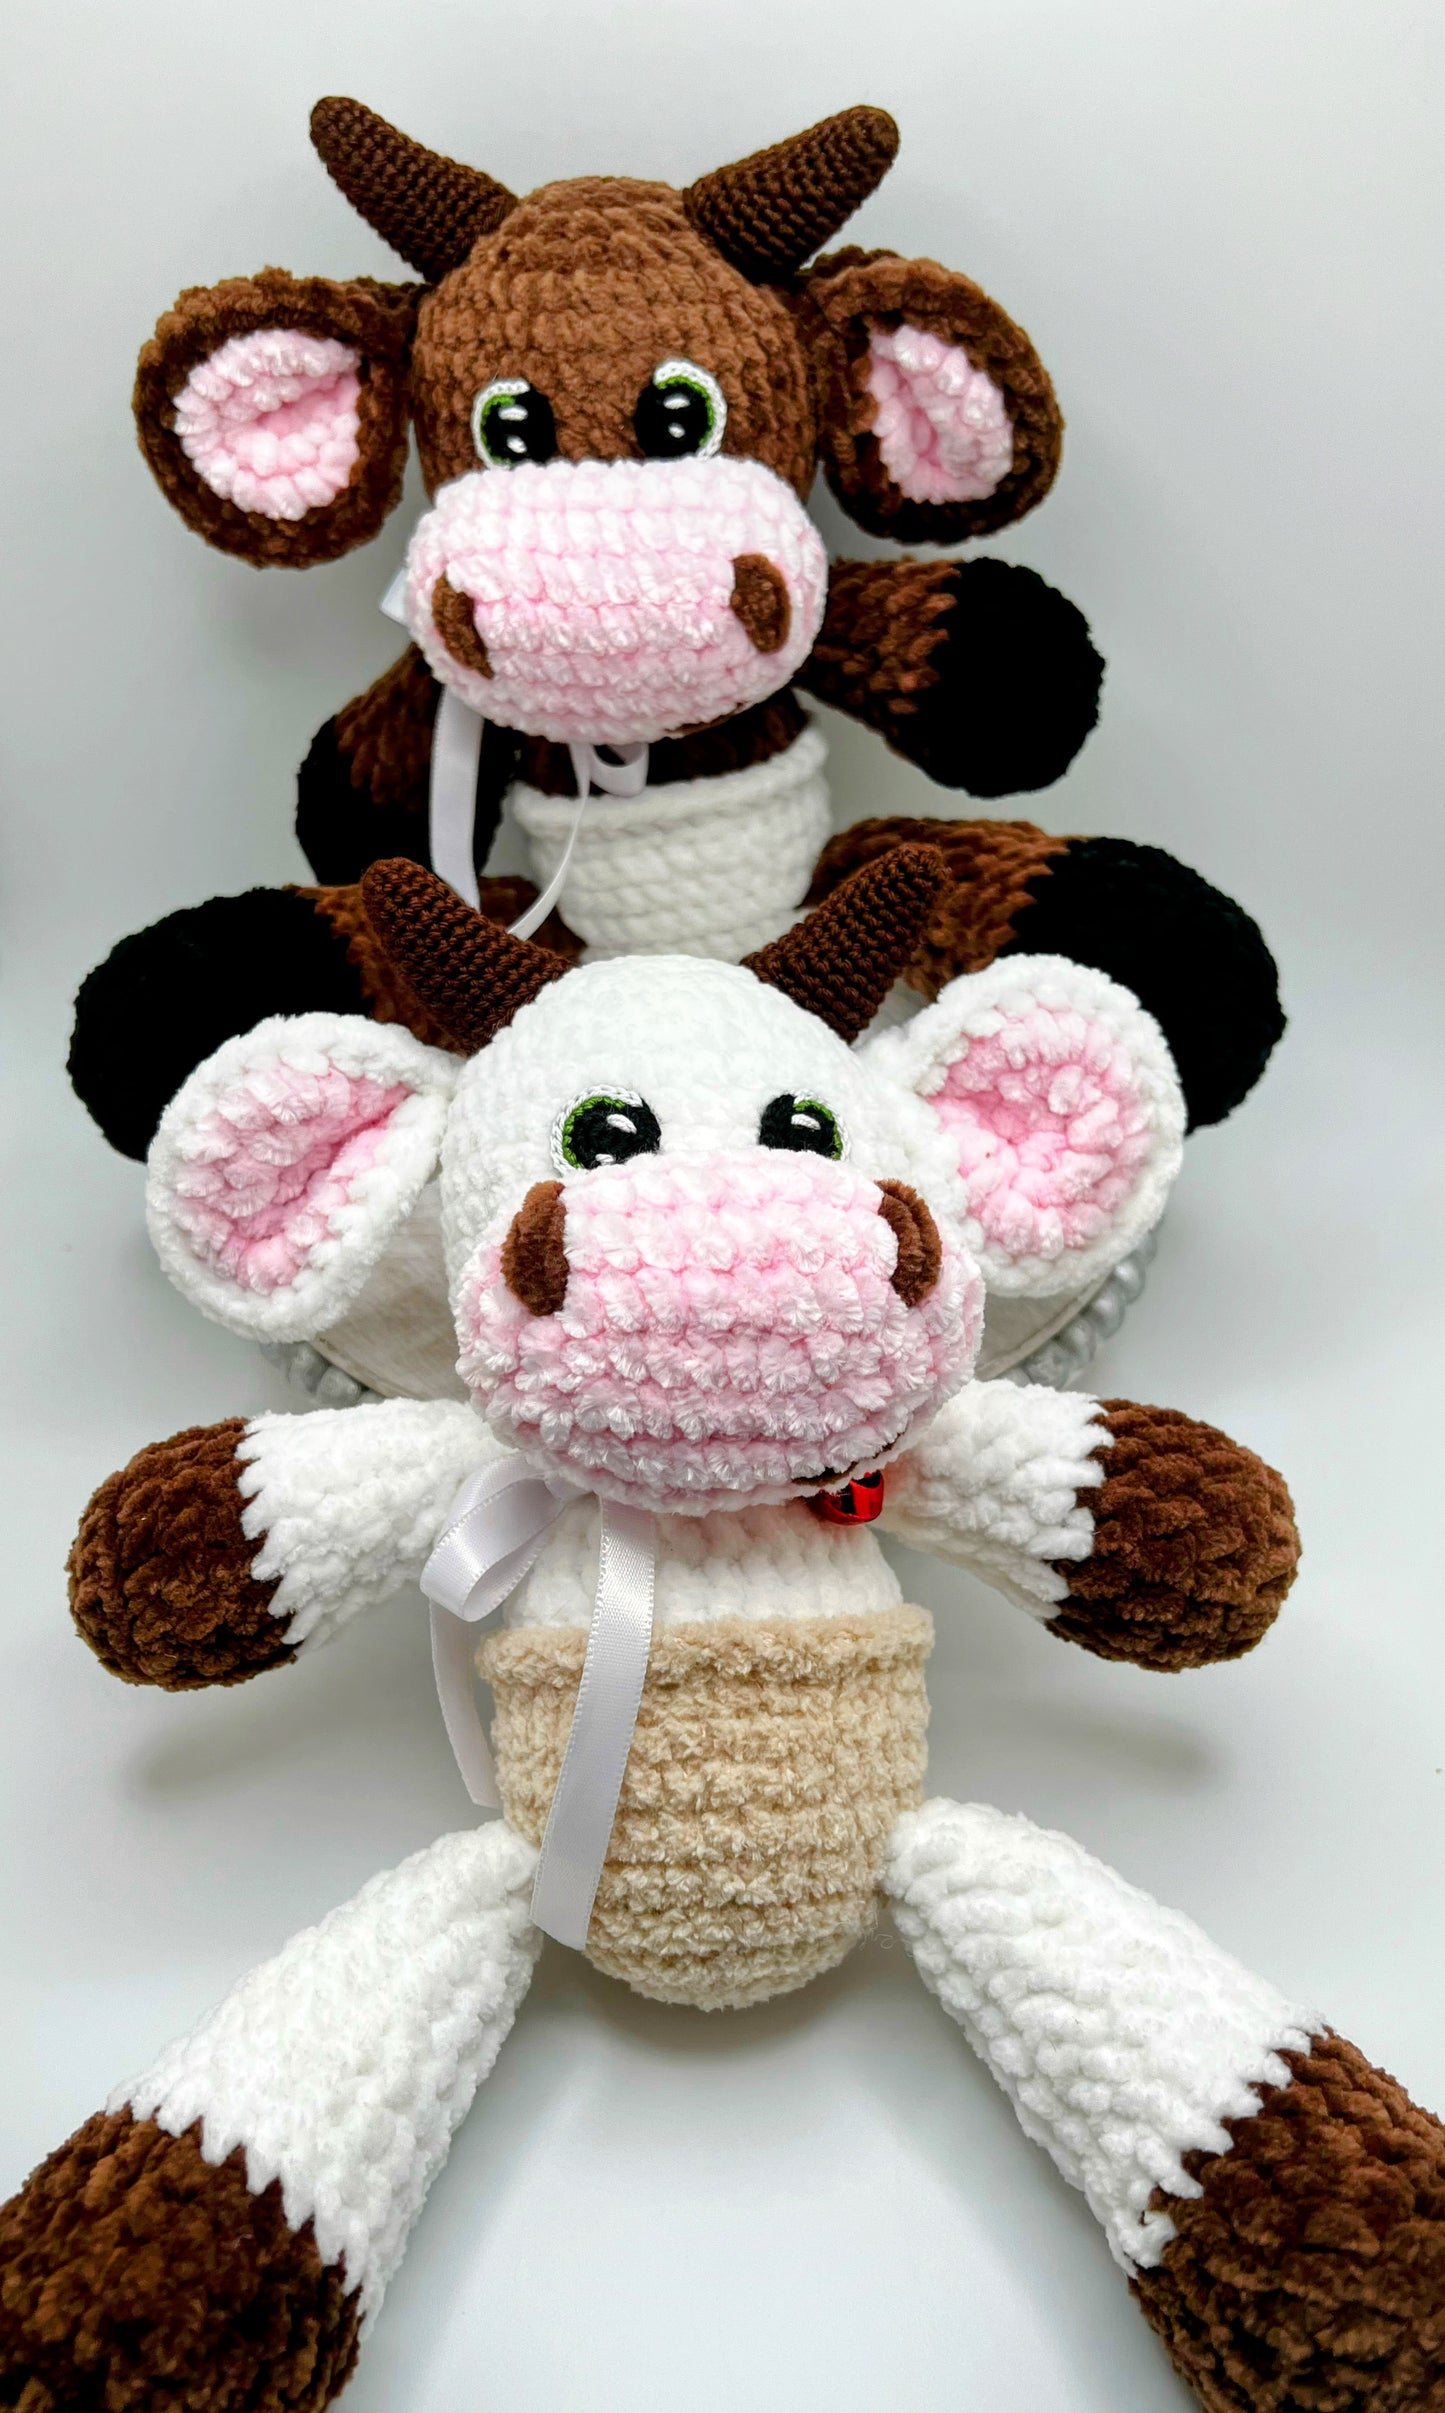 Stuffed Cow Toy - Crochet Knitted Amigurumi Toy